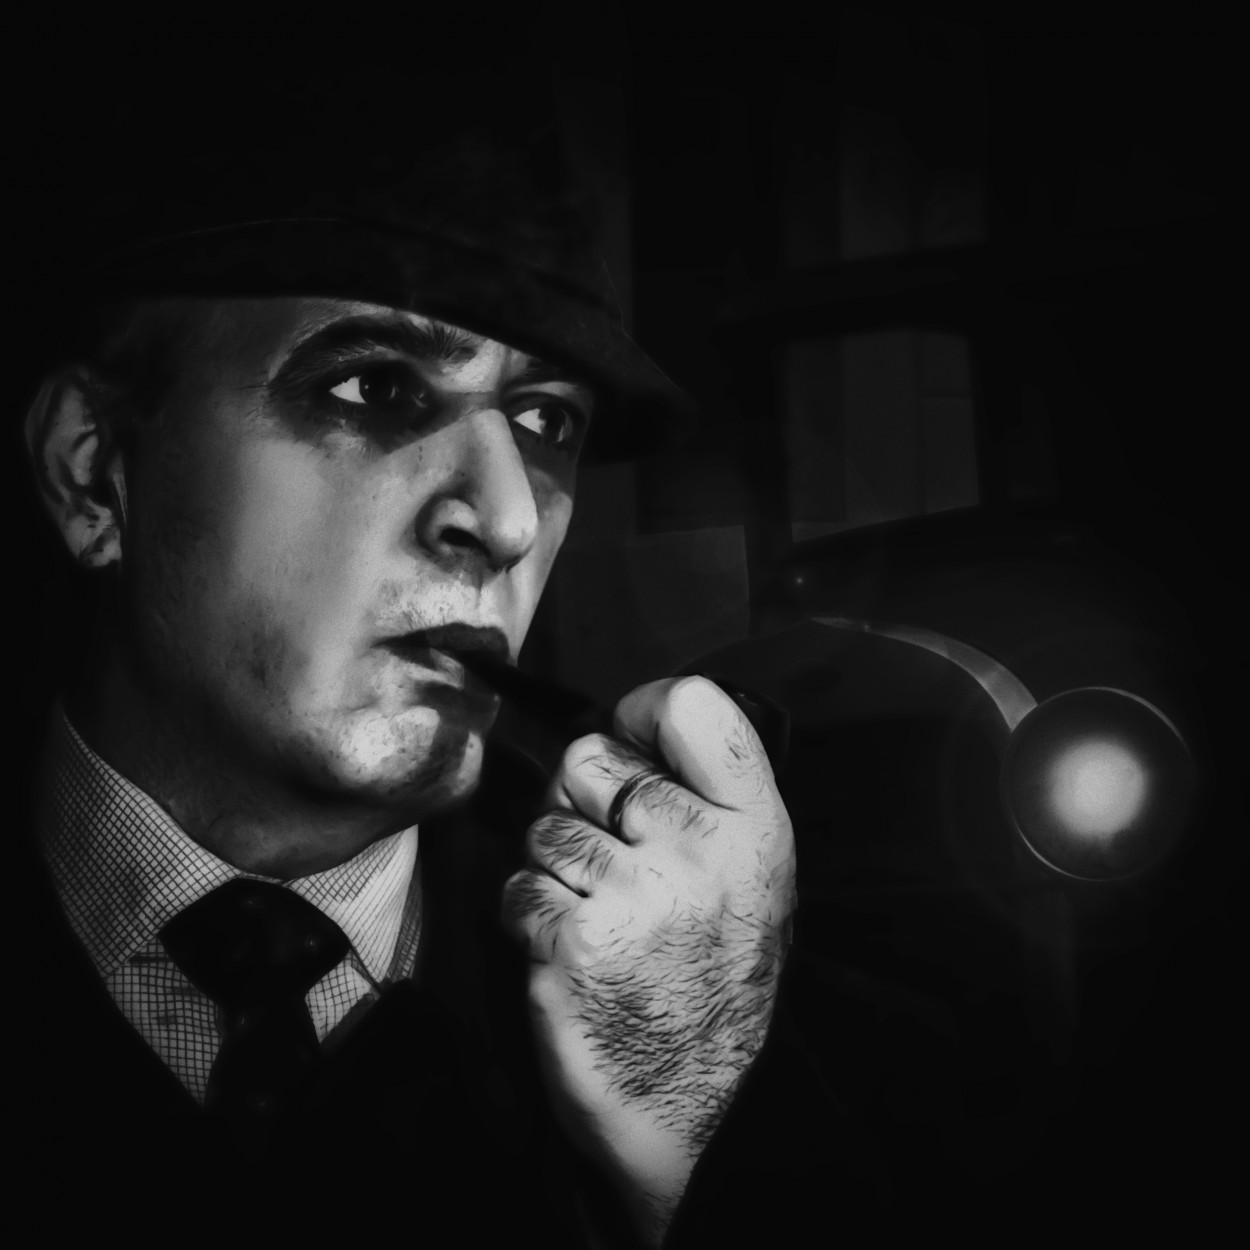 "Self portrait (film noir)" de Nstor Carreres Castro